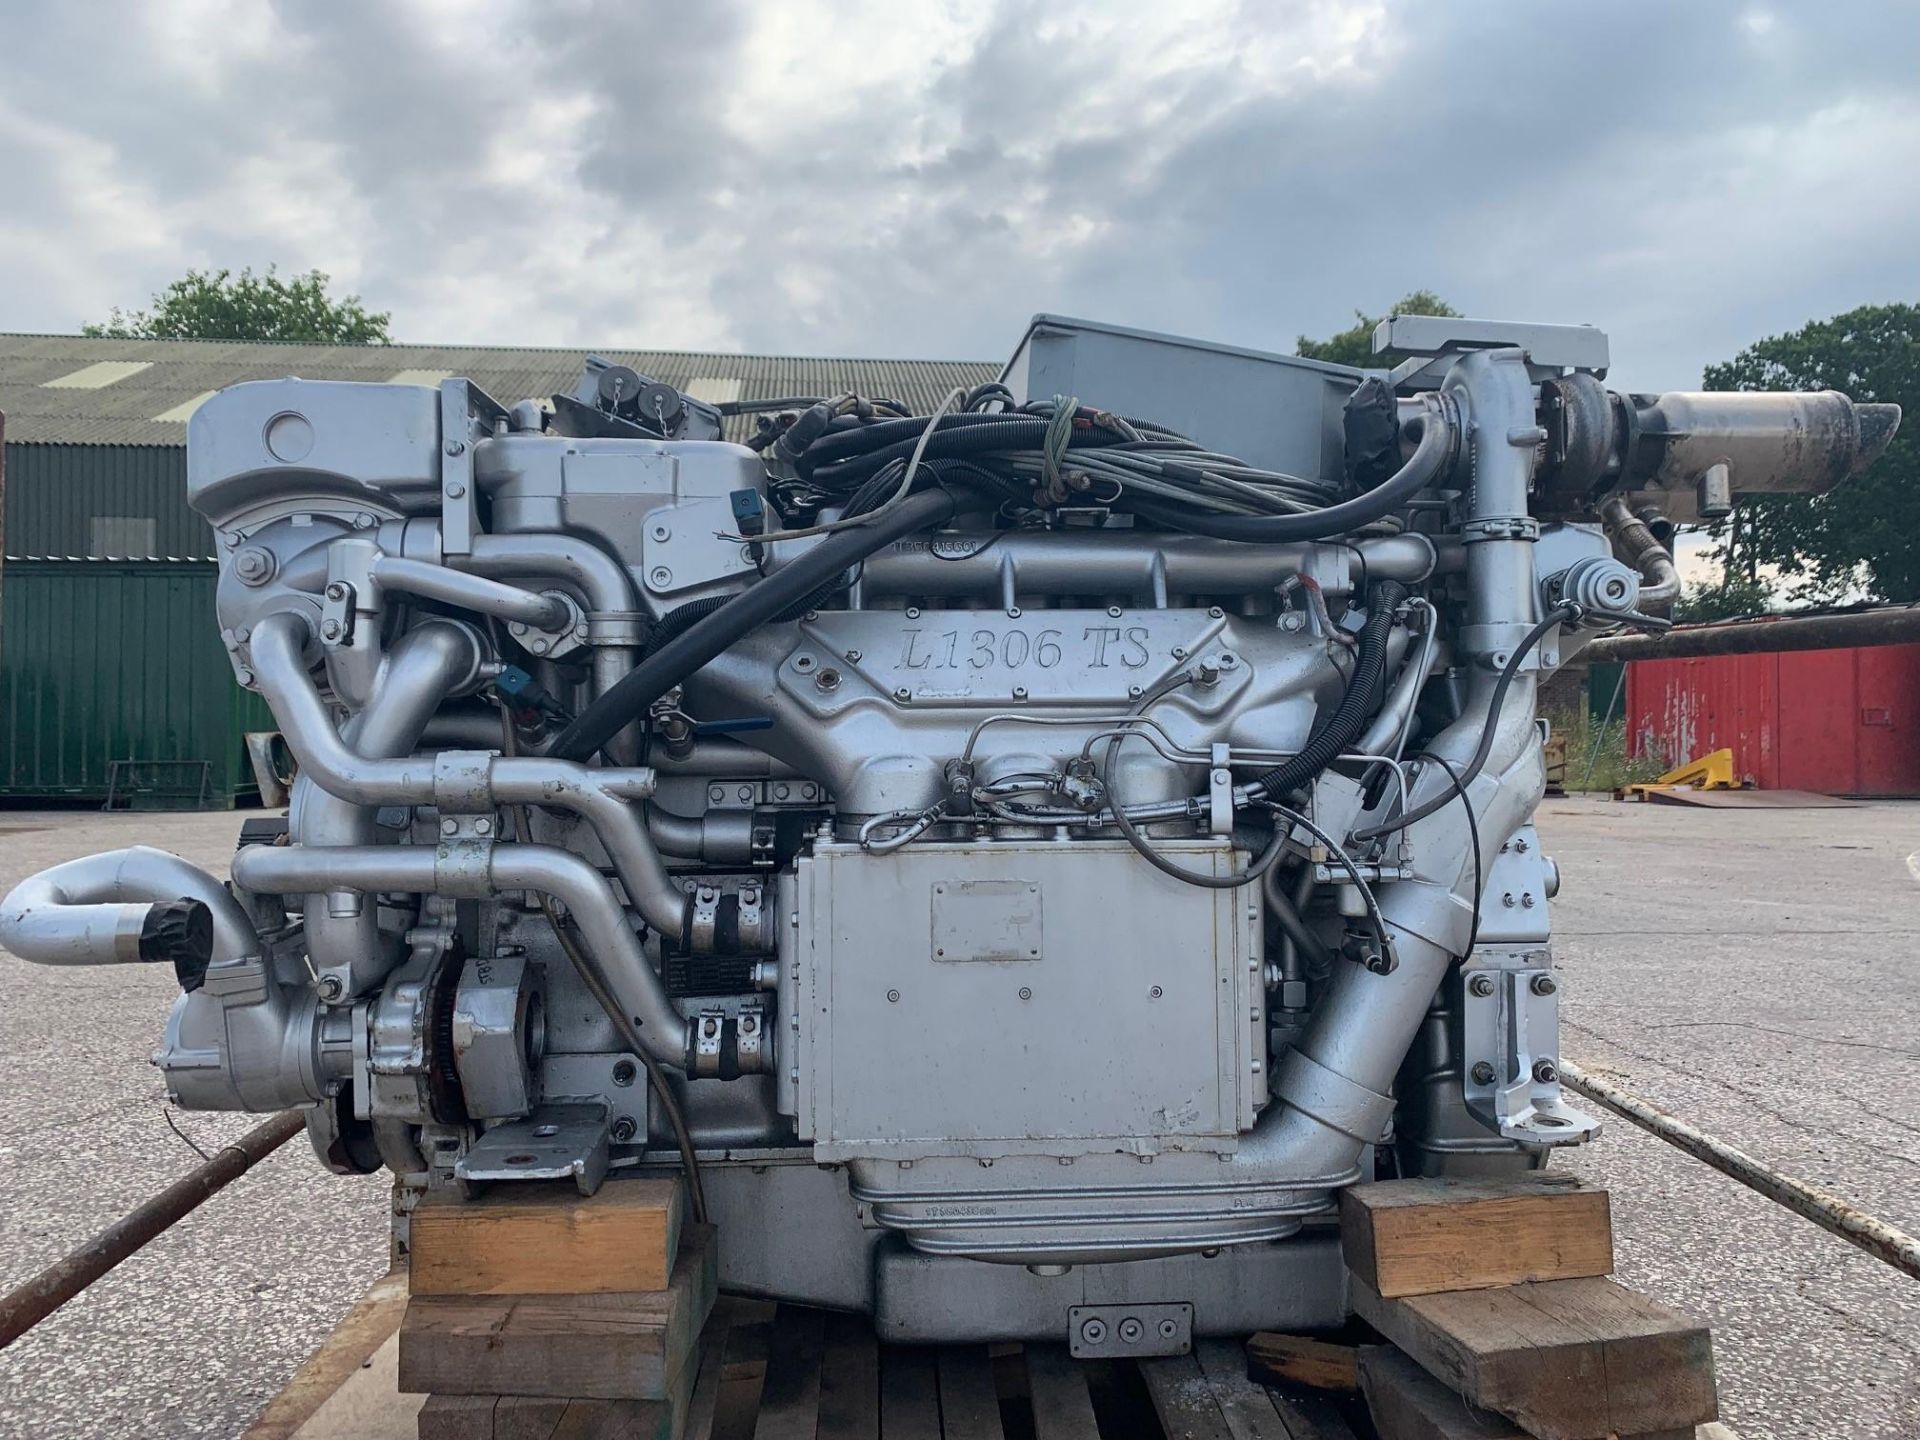 Isotta Fraschini L130GTS Marine Diesel Engine ex Standby - Image 2 of 6